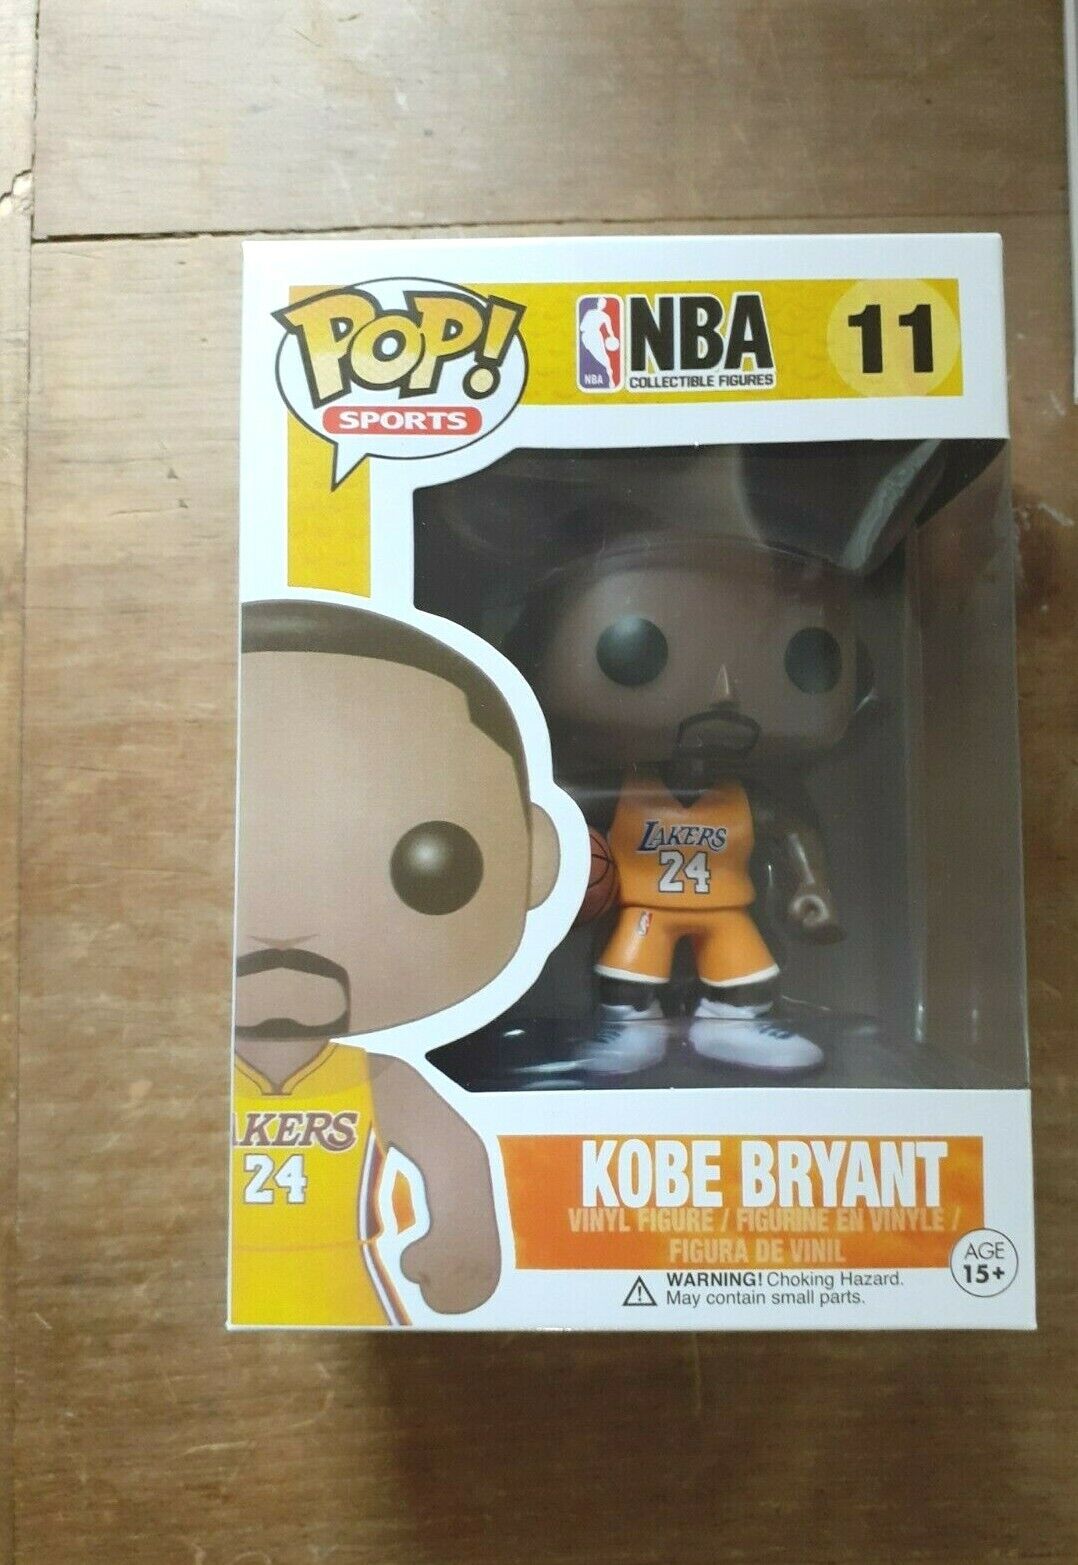 Funko Pop Kobe Bryant #11 Yellow Jersey